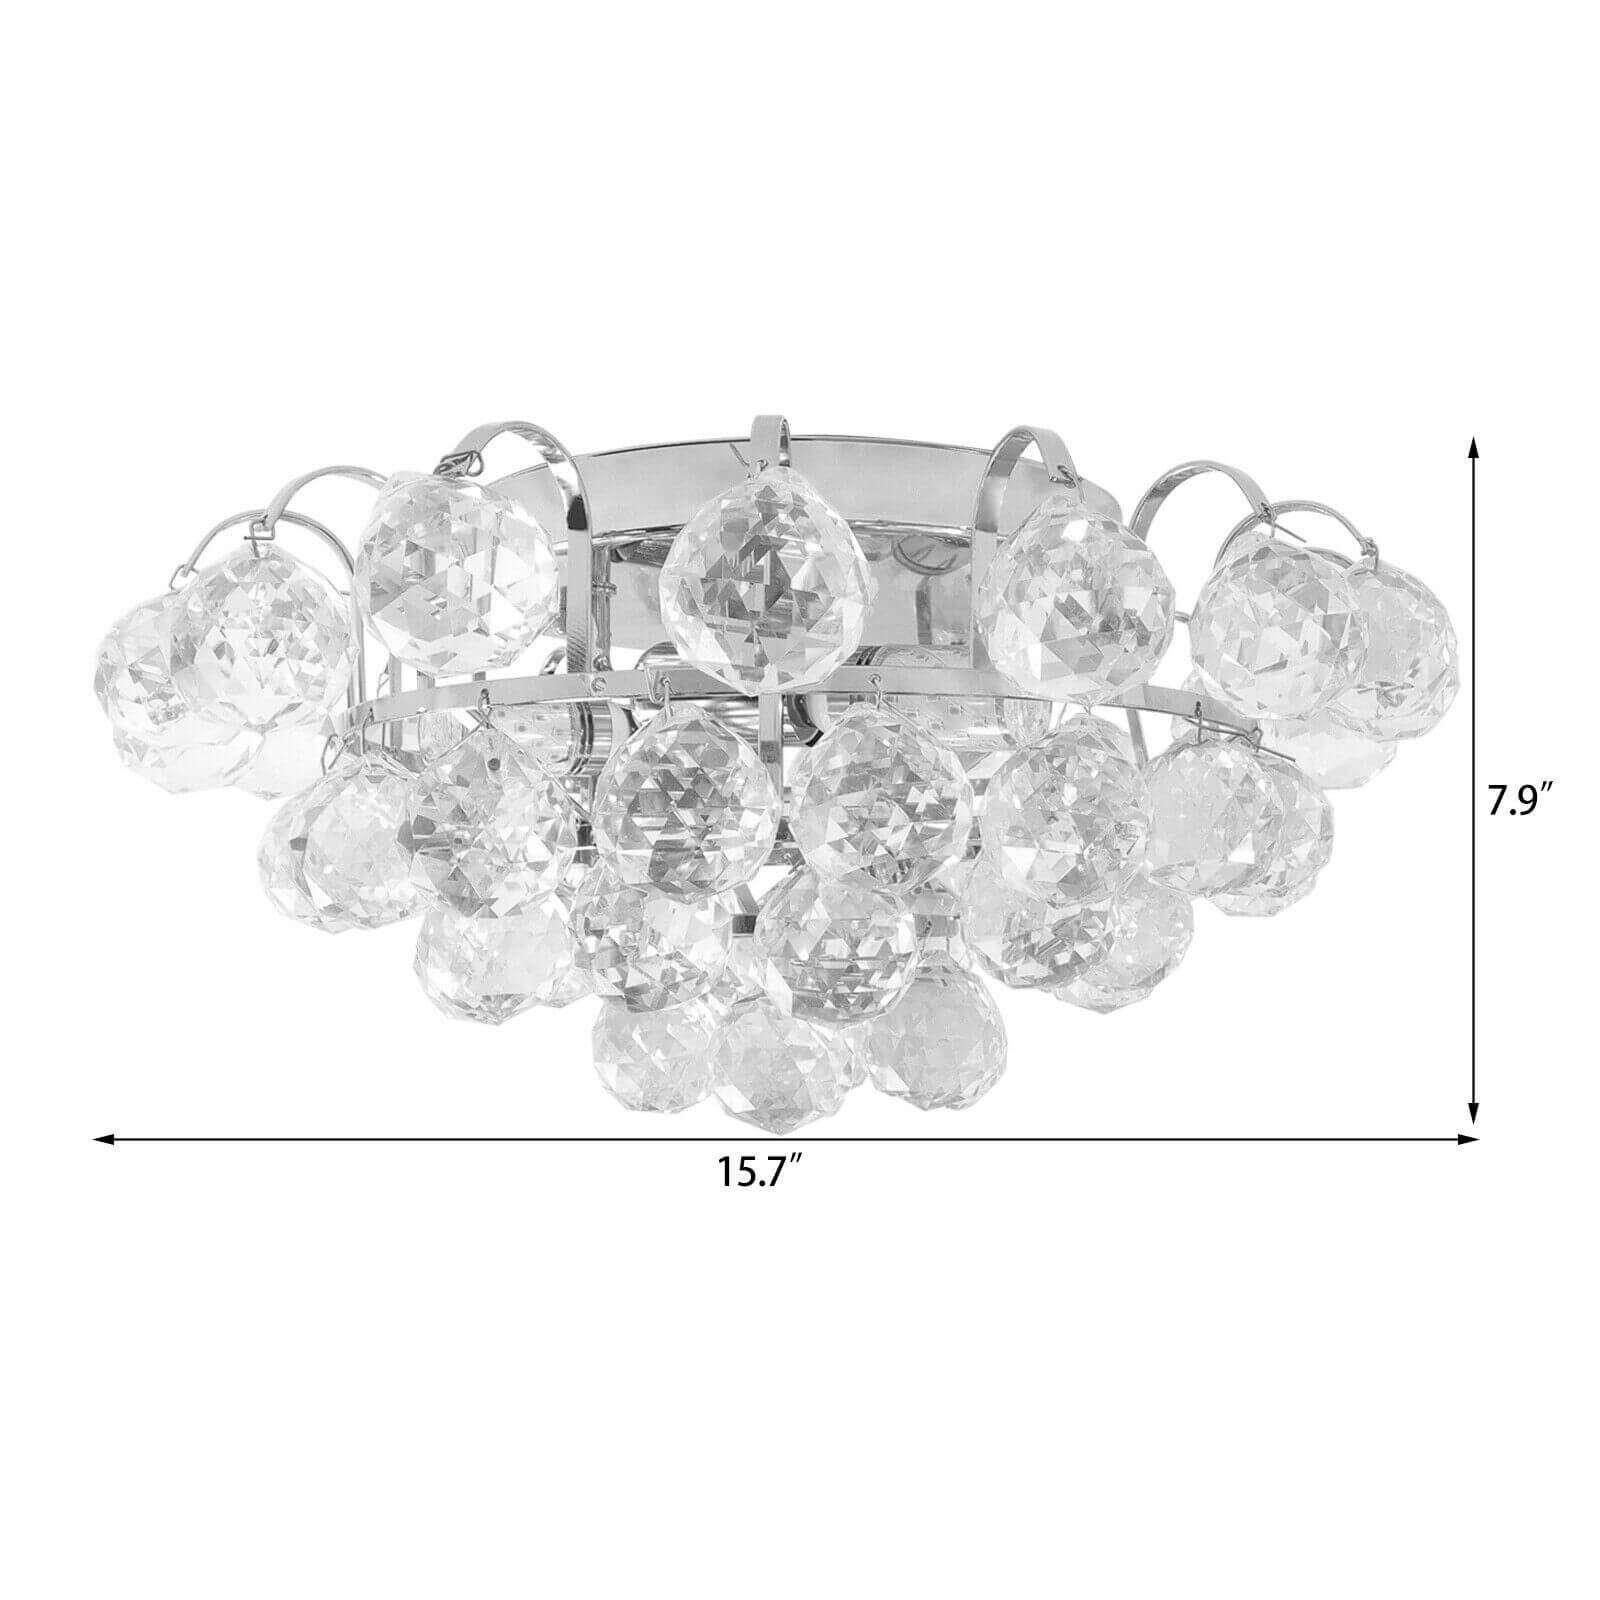 LED Crystal Ceiling Light white size